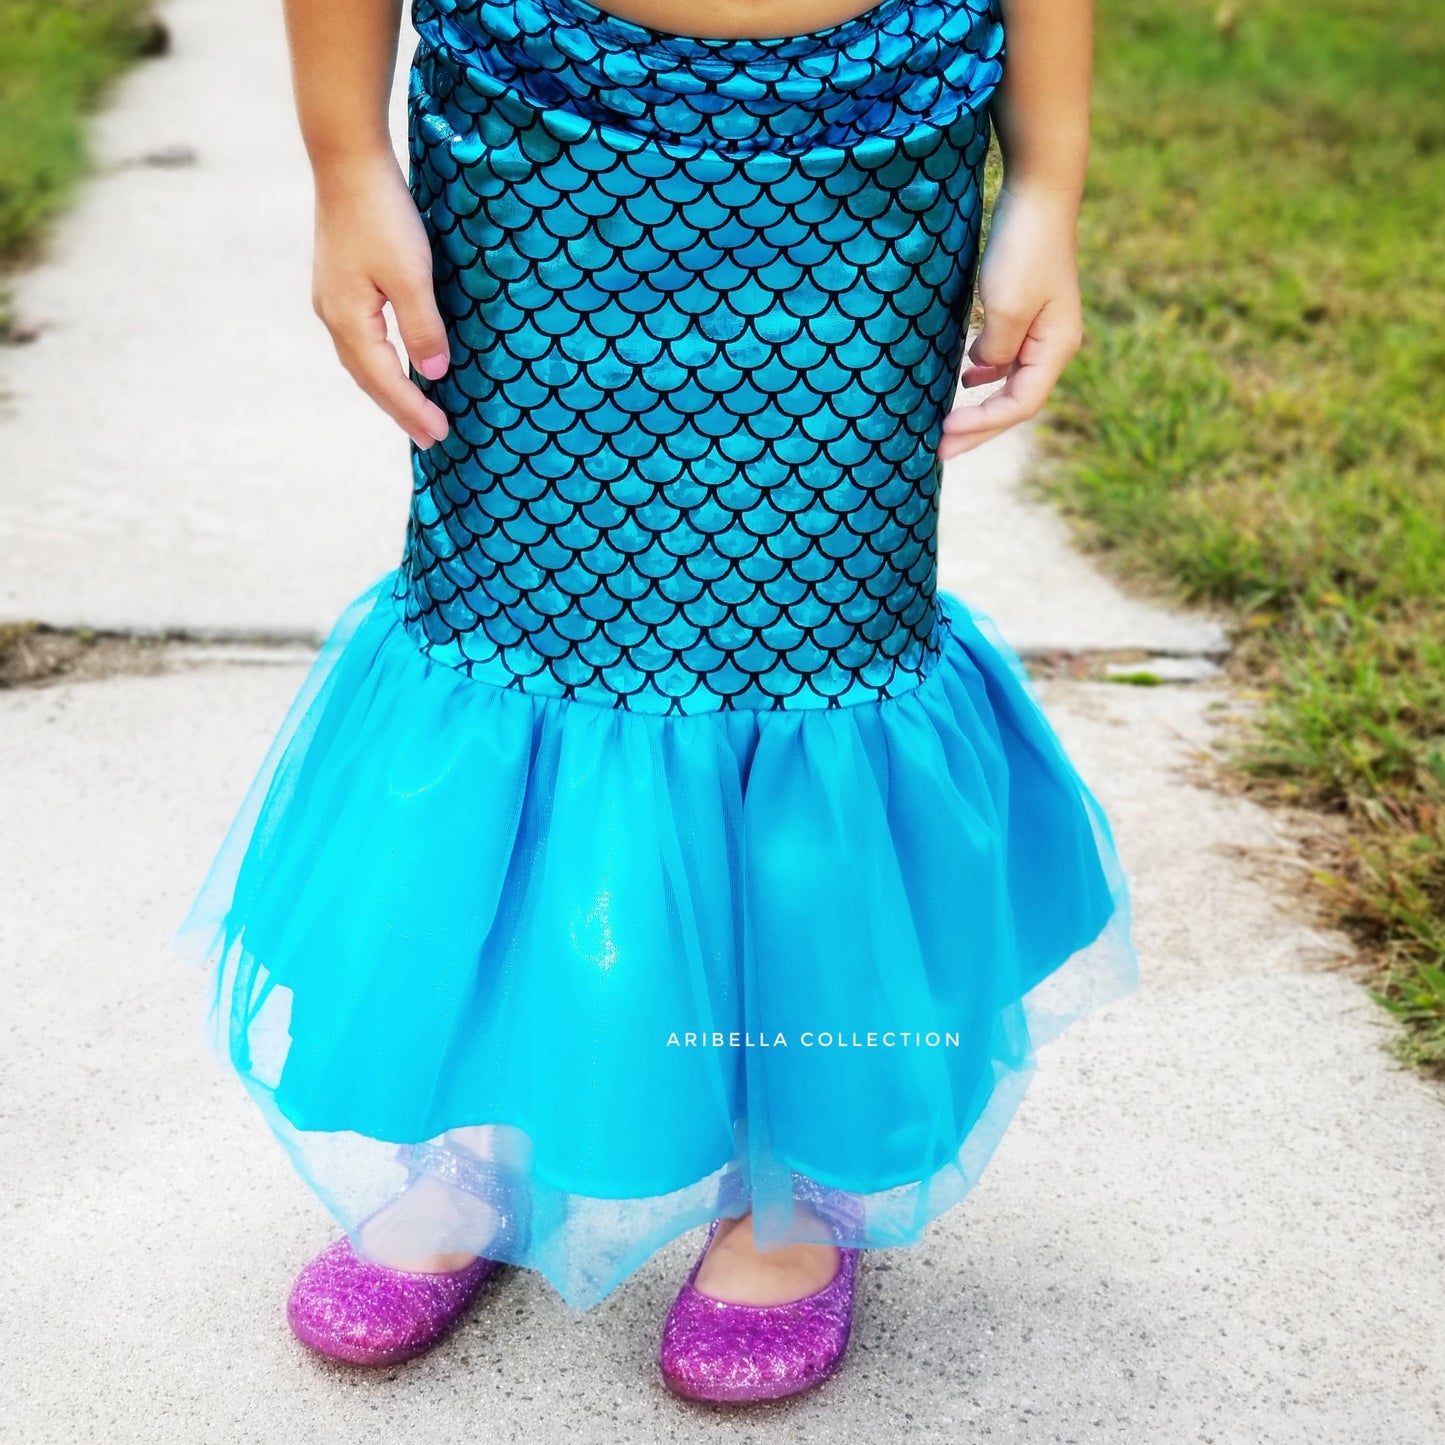 Mermaid Walkable Tail Skirt - Emerald Green, Aqua Blue, or Iridescent - Aribella Collection, Inc.